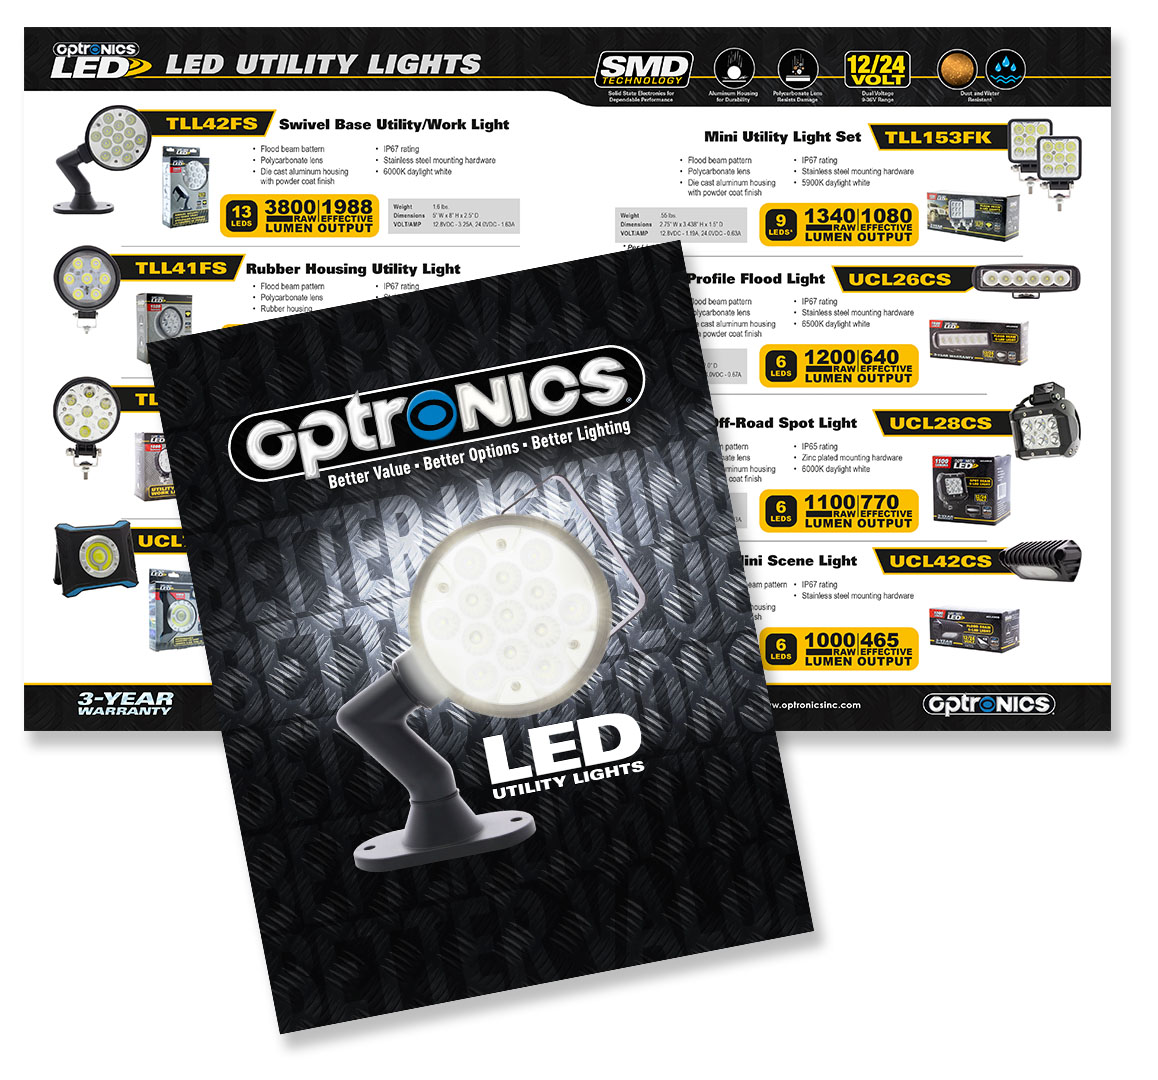 LED Utility Brochure